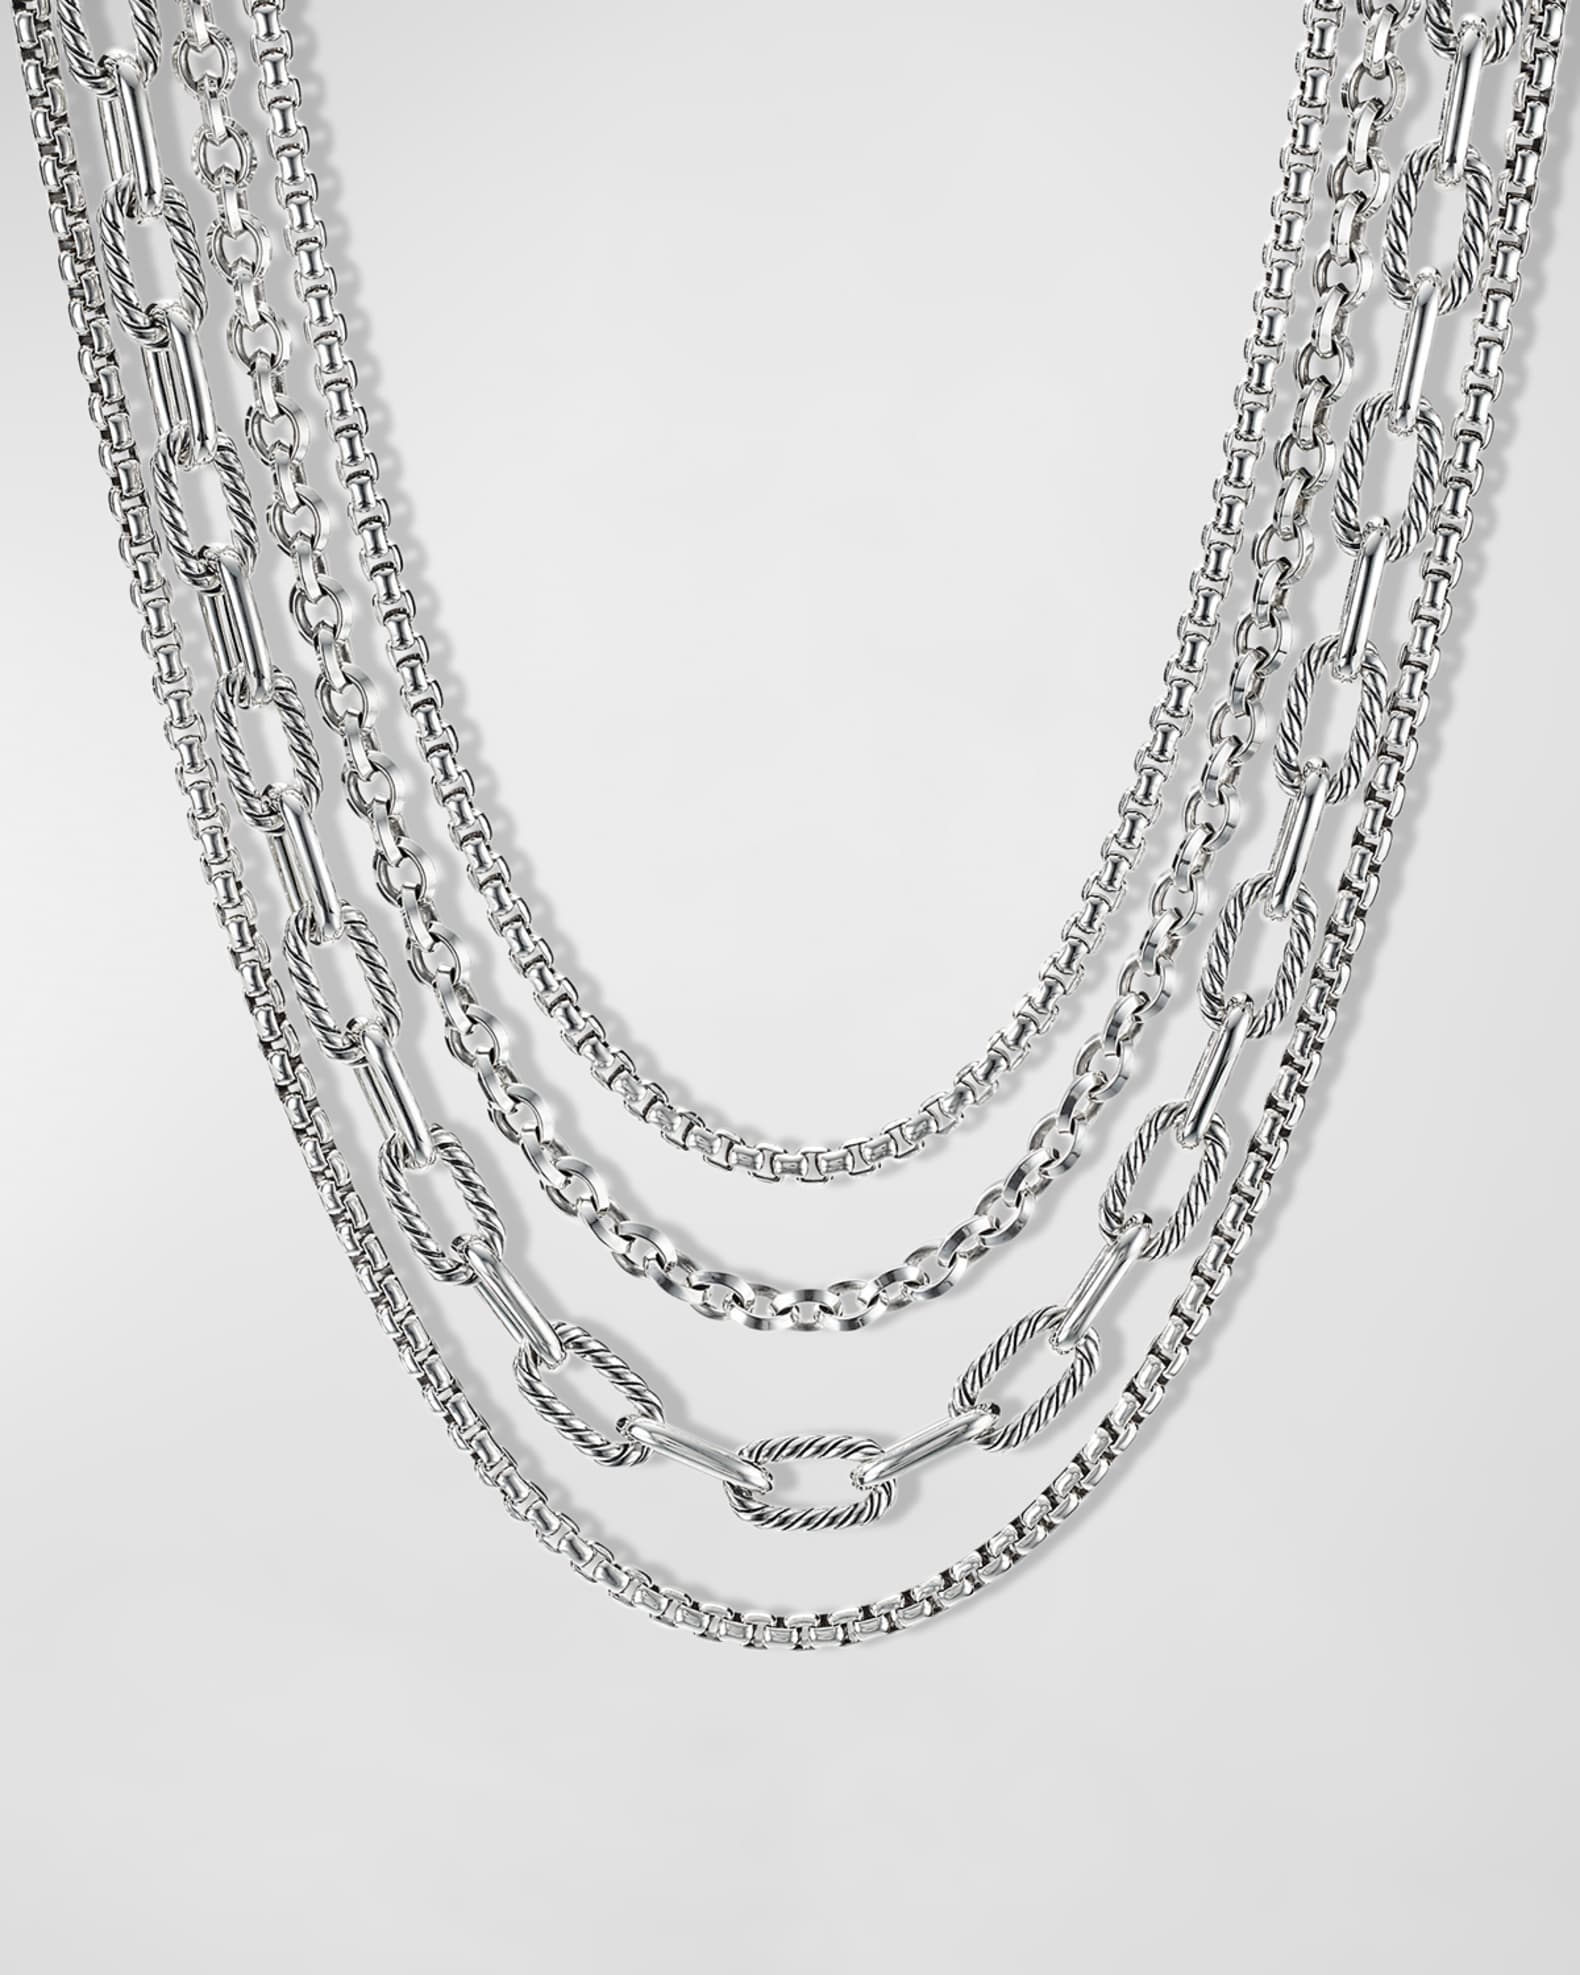 David Yurman 4-Row Silver Mixed Chain Bib Necklace | Neiman Marcus